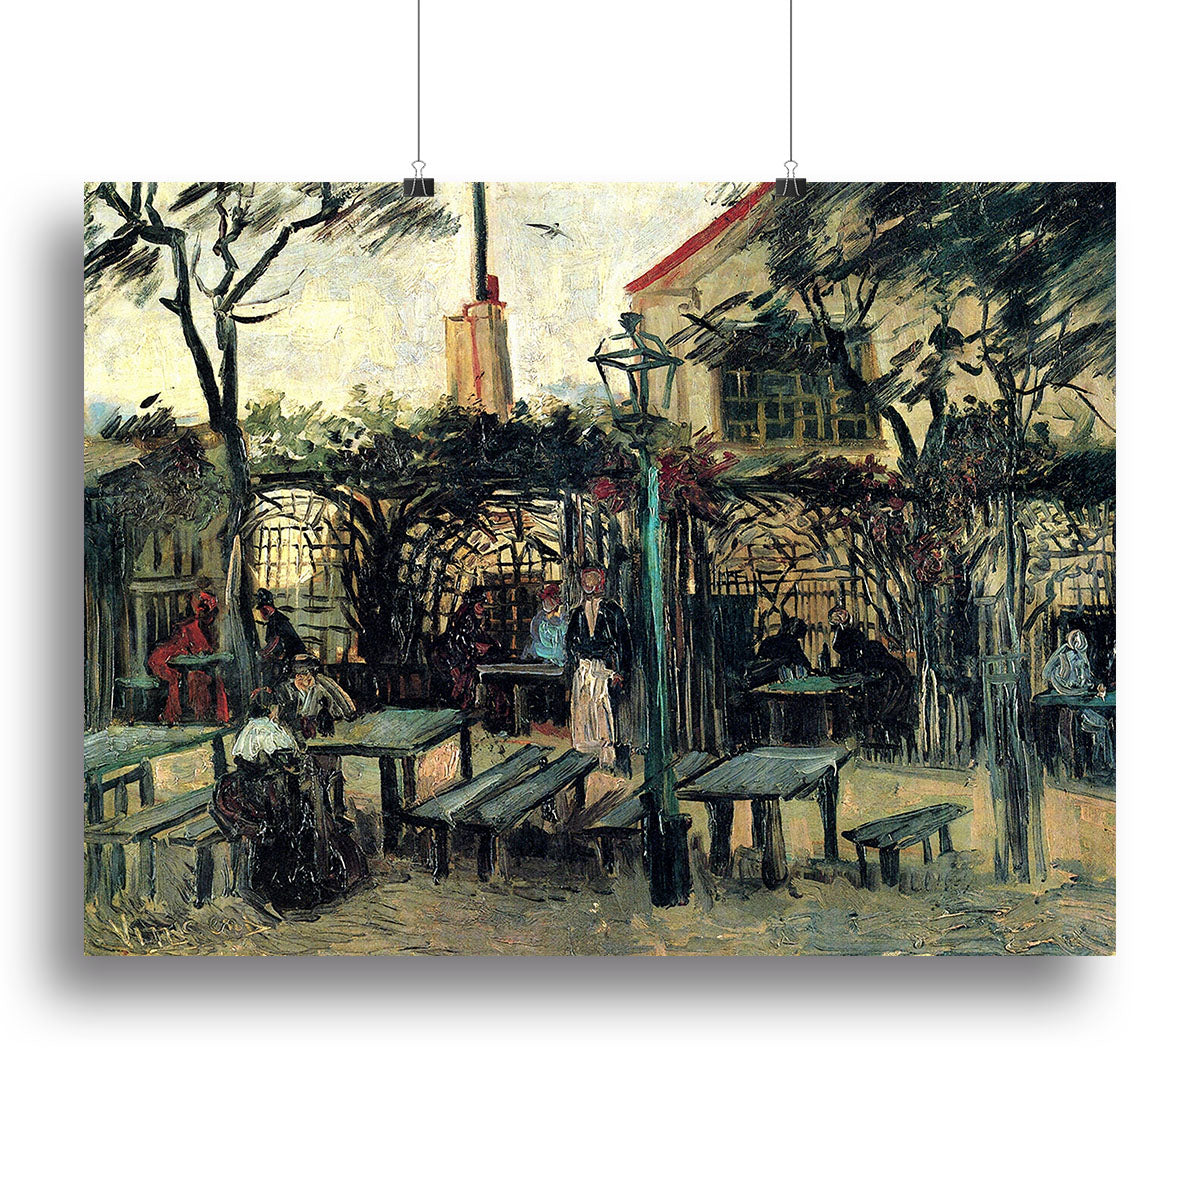 Terrace of a Cafe on Montmartre La Guinguette1 by Van Gogh Canvas Print or Poster - Canvas Art Rocks - 2